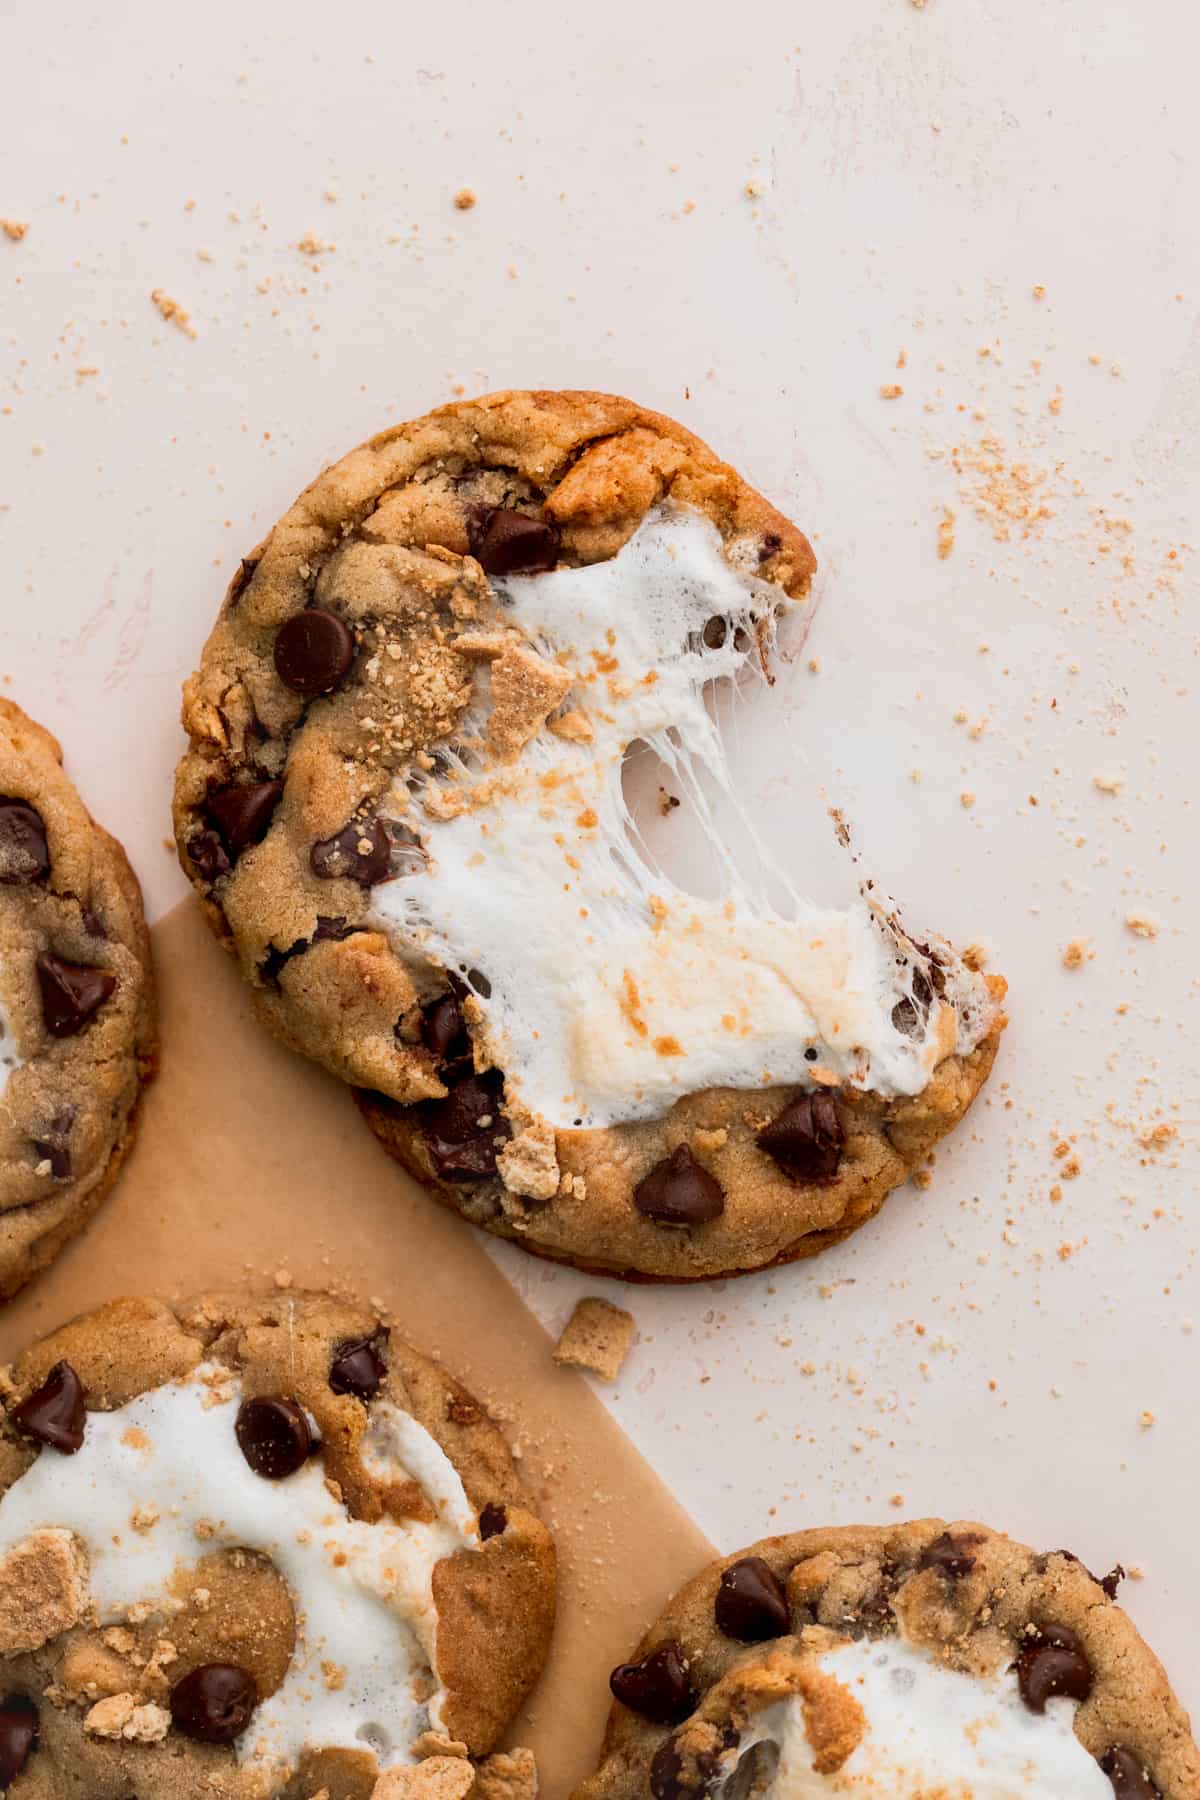 One cookie split in half.